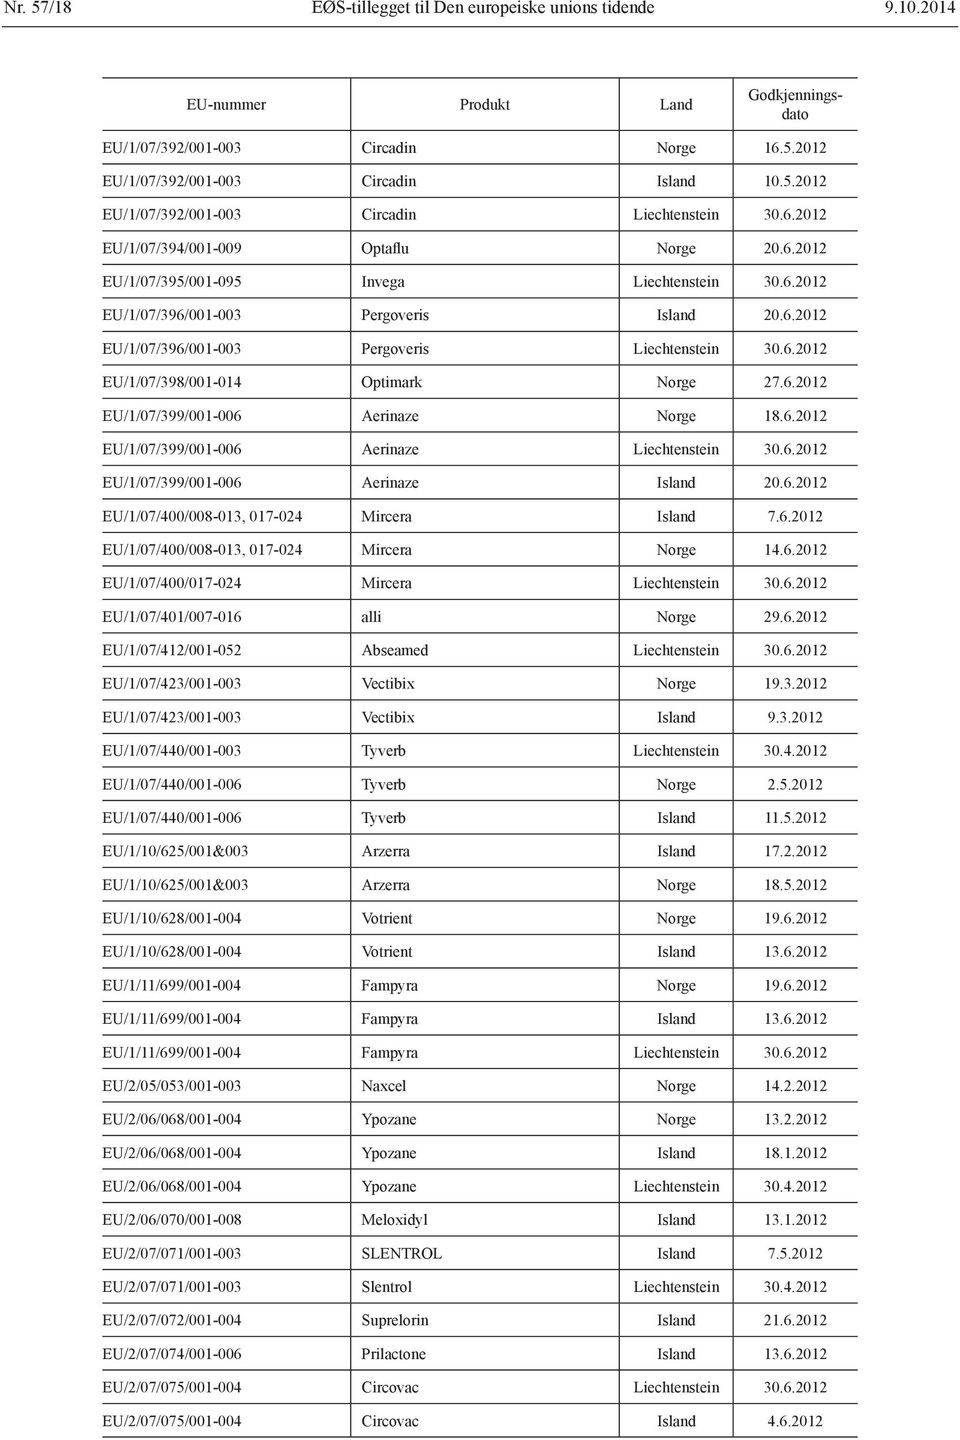 6.2012 EU/1/07/399/001-006 Aerinaze Norge 18.6.2012 EU/1/07/399/001-006 Aerinaze Liechtenstein 30.6.2012 EU/1/07/399/001-006 Aerinaze Island 20.6.2012 EU/1/07/400/008-013, 017-024 Mircera Island 7.6.2012 EU/1/07/400/008-013, 017-024 Mircera Norge 14.